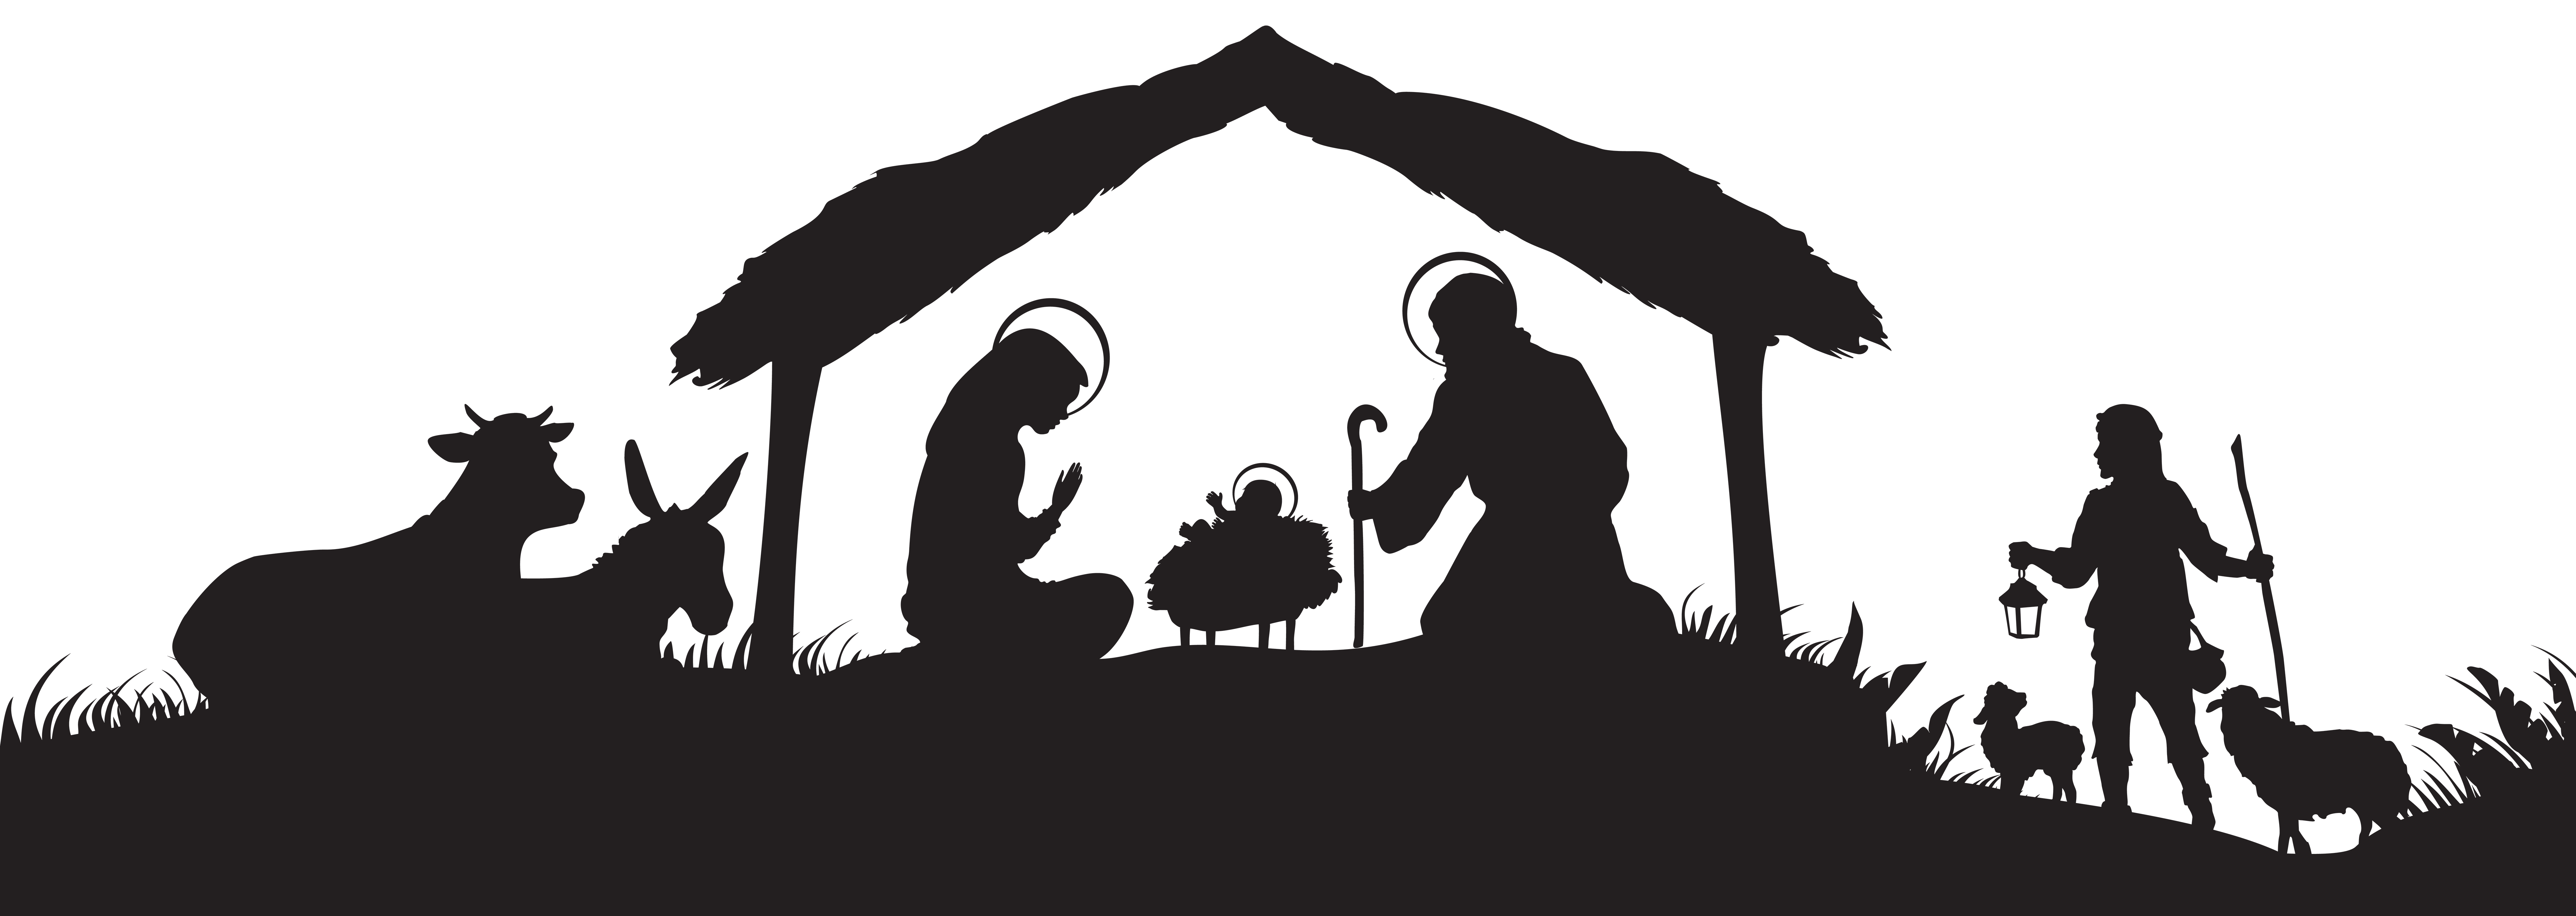 nativity silhouette clip art transparent